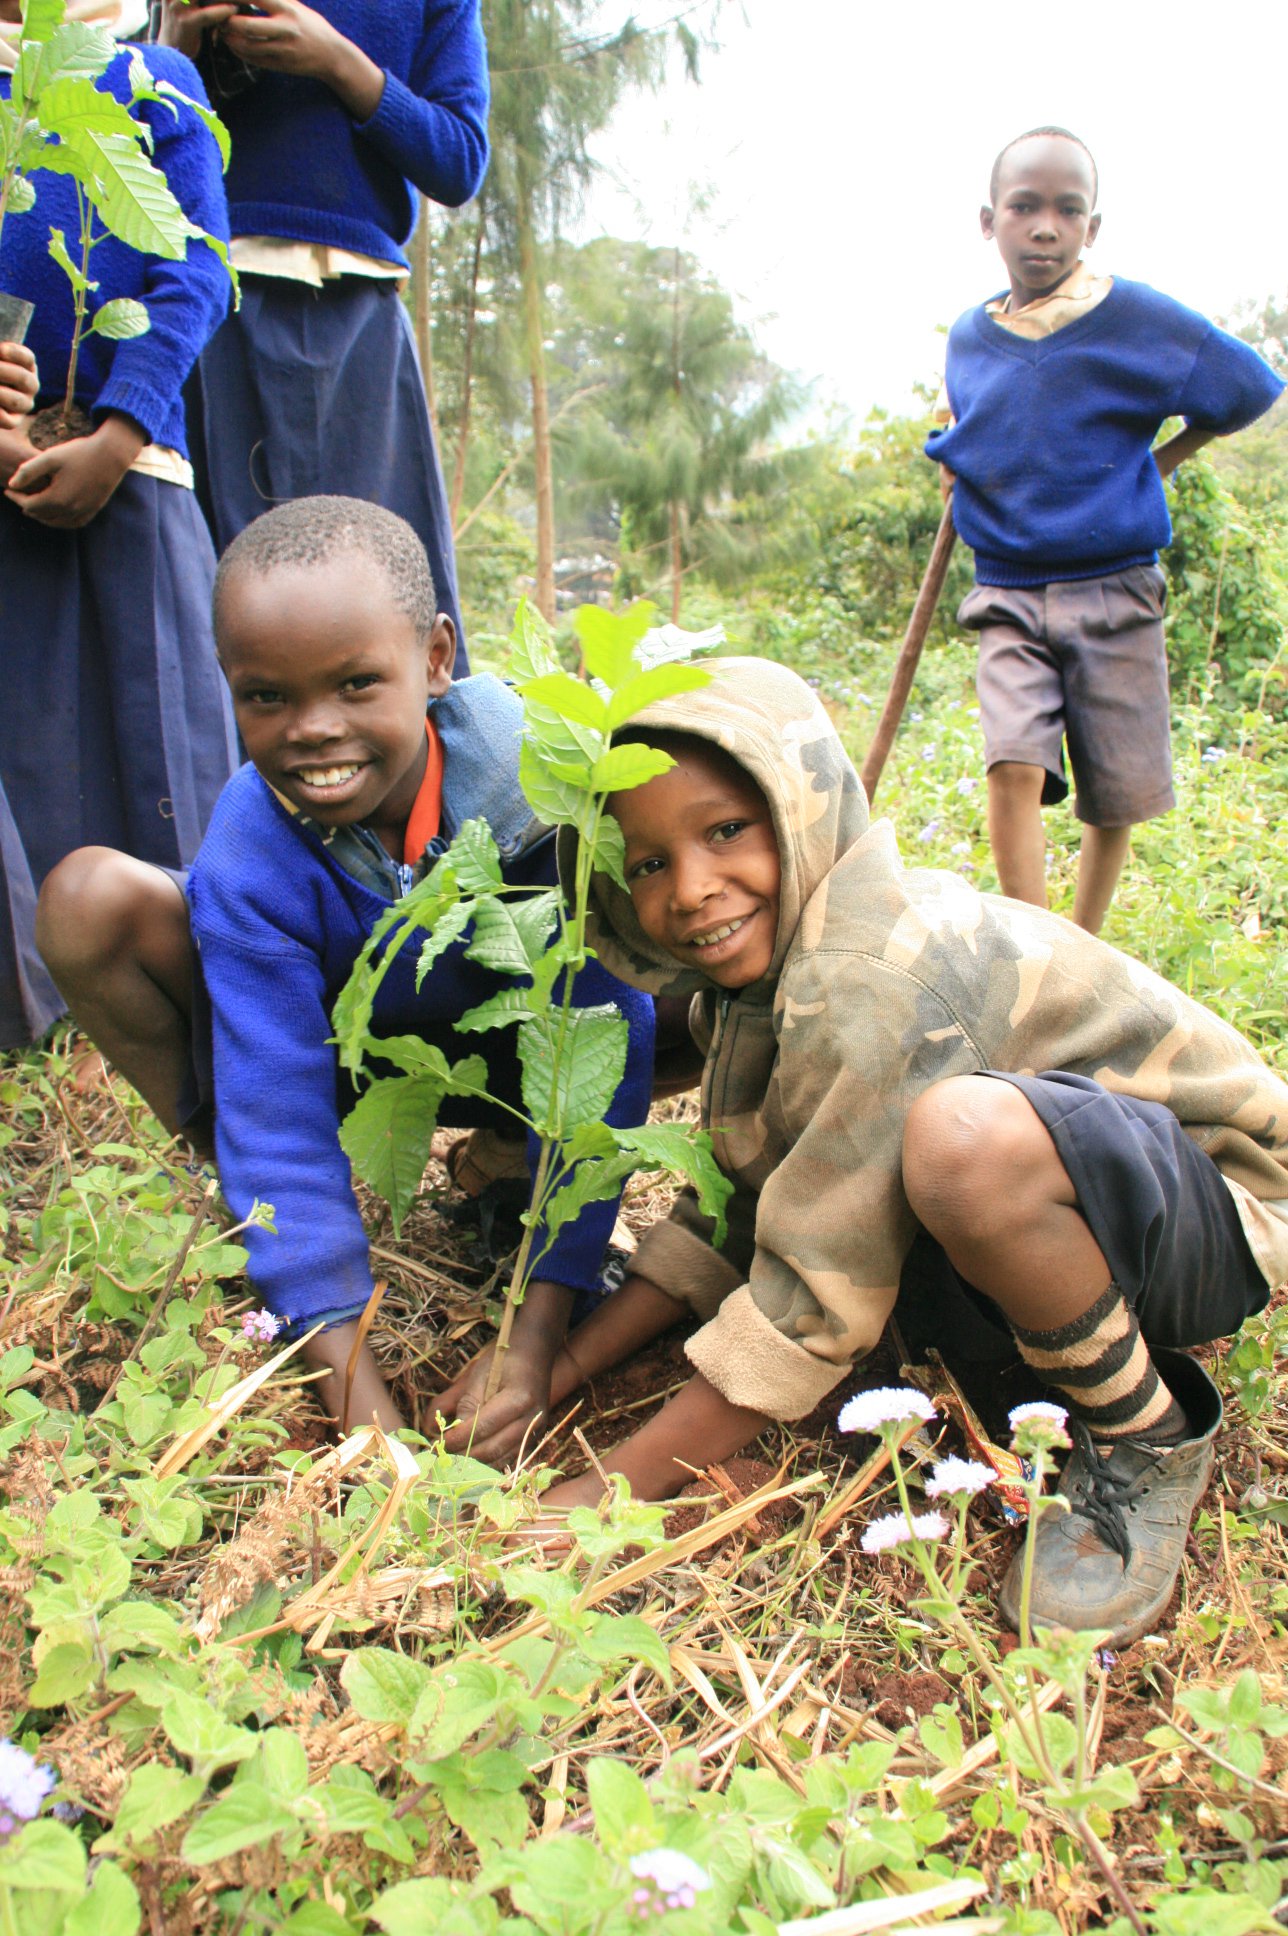 Boys planting trees together through ForestNation's We Plant You Plant program